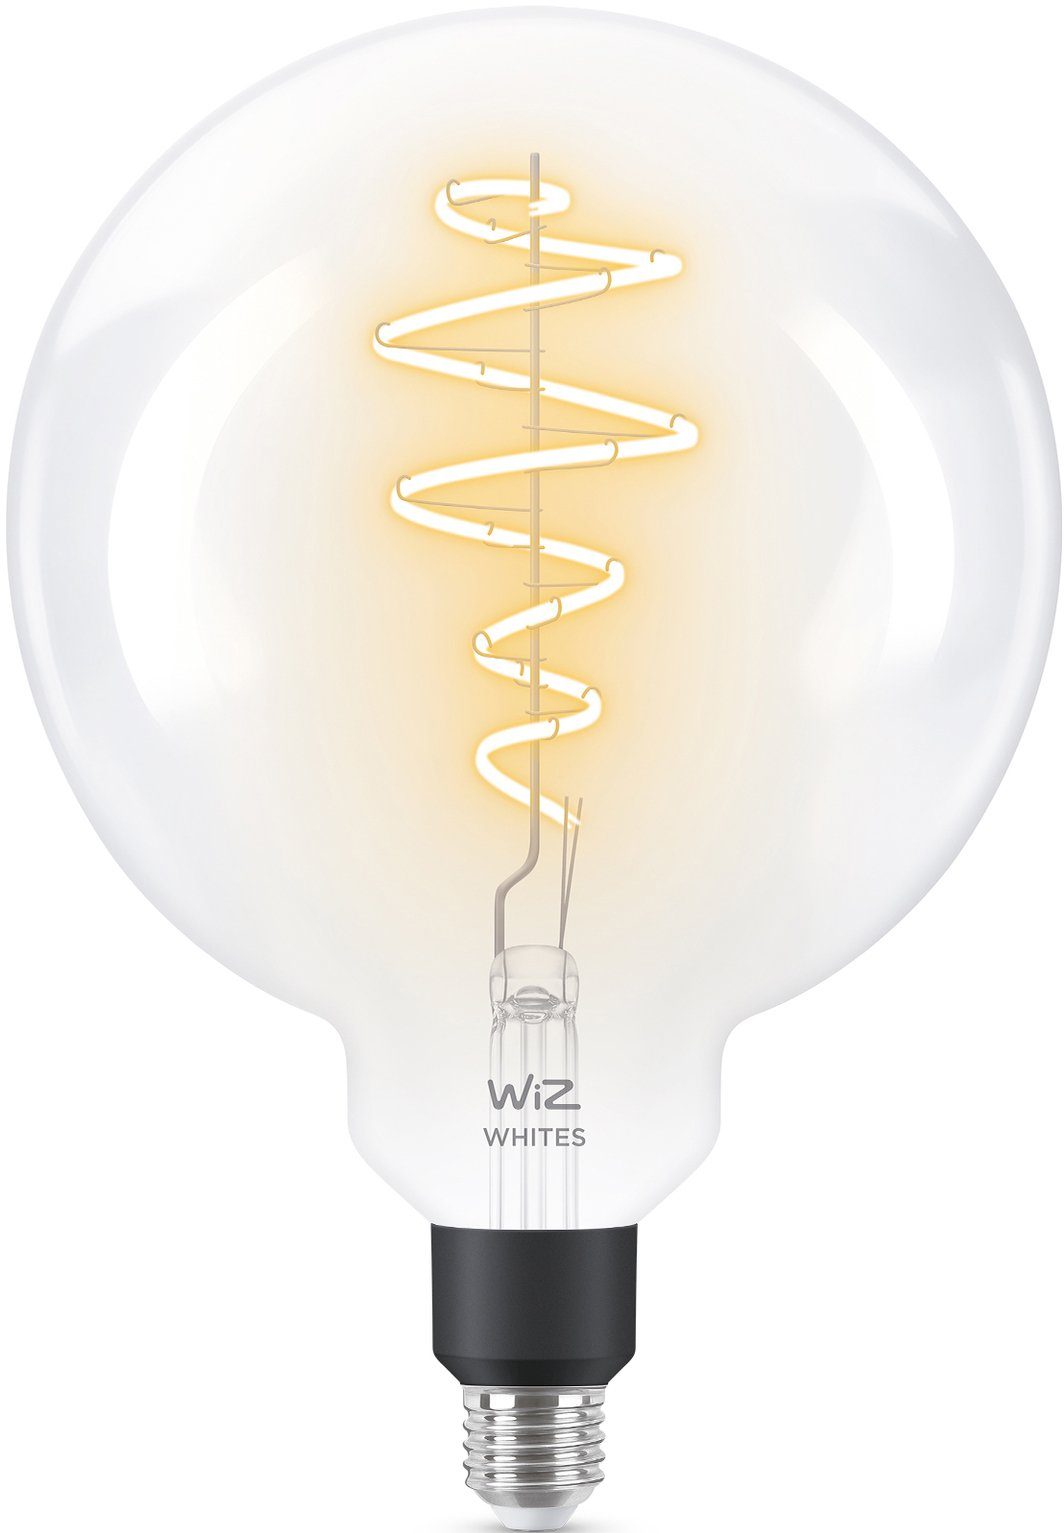 WiZ LED-Filament 40W Filament Filament Clear für Einzelpack, Tunable LED Vintage-Design White Wiz E27, 1 XL-Globeform St., E27 G200 Lampen Warmweiß, klassisches